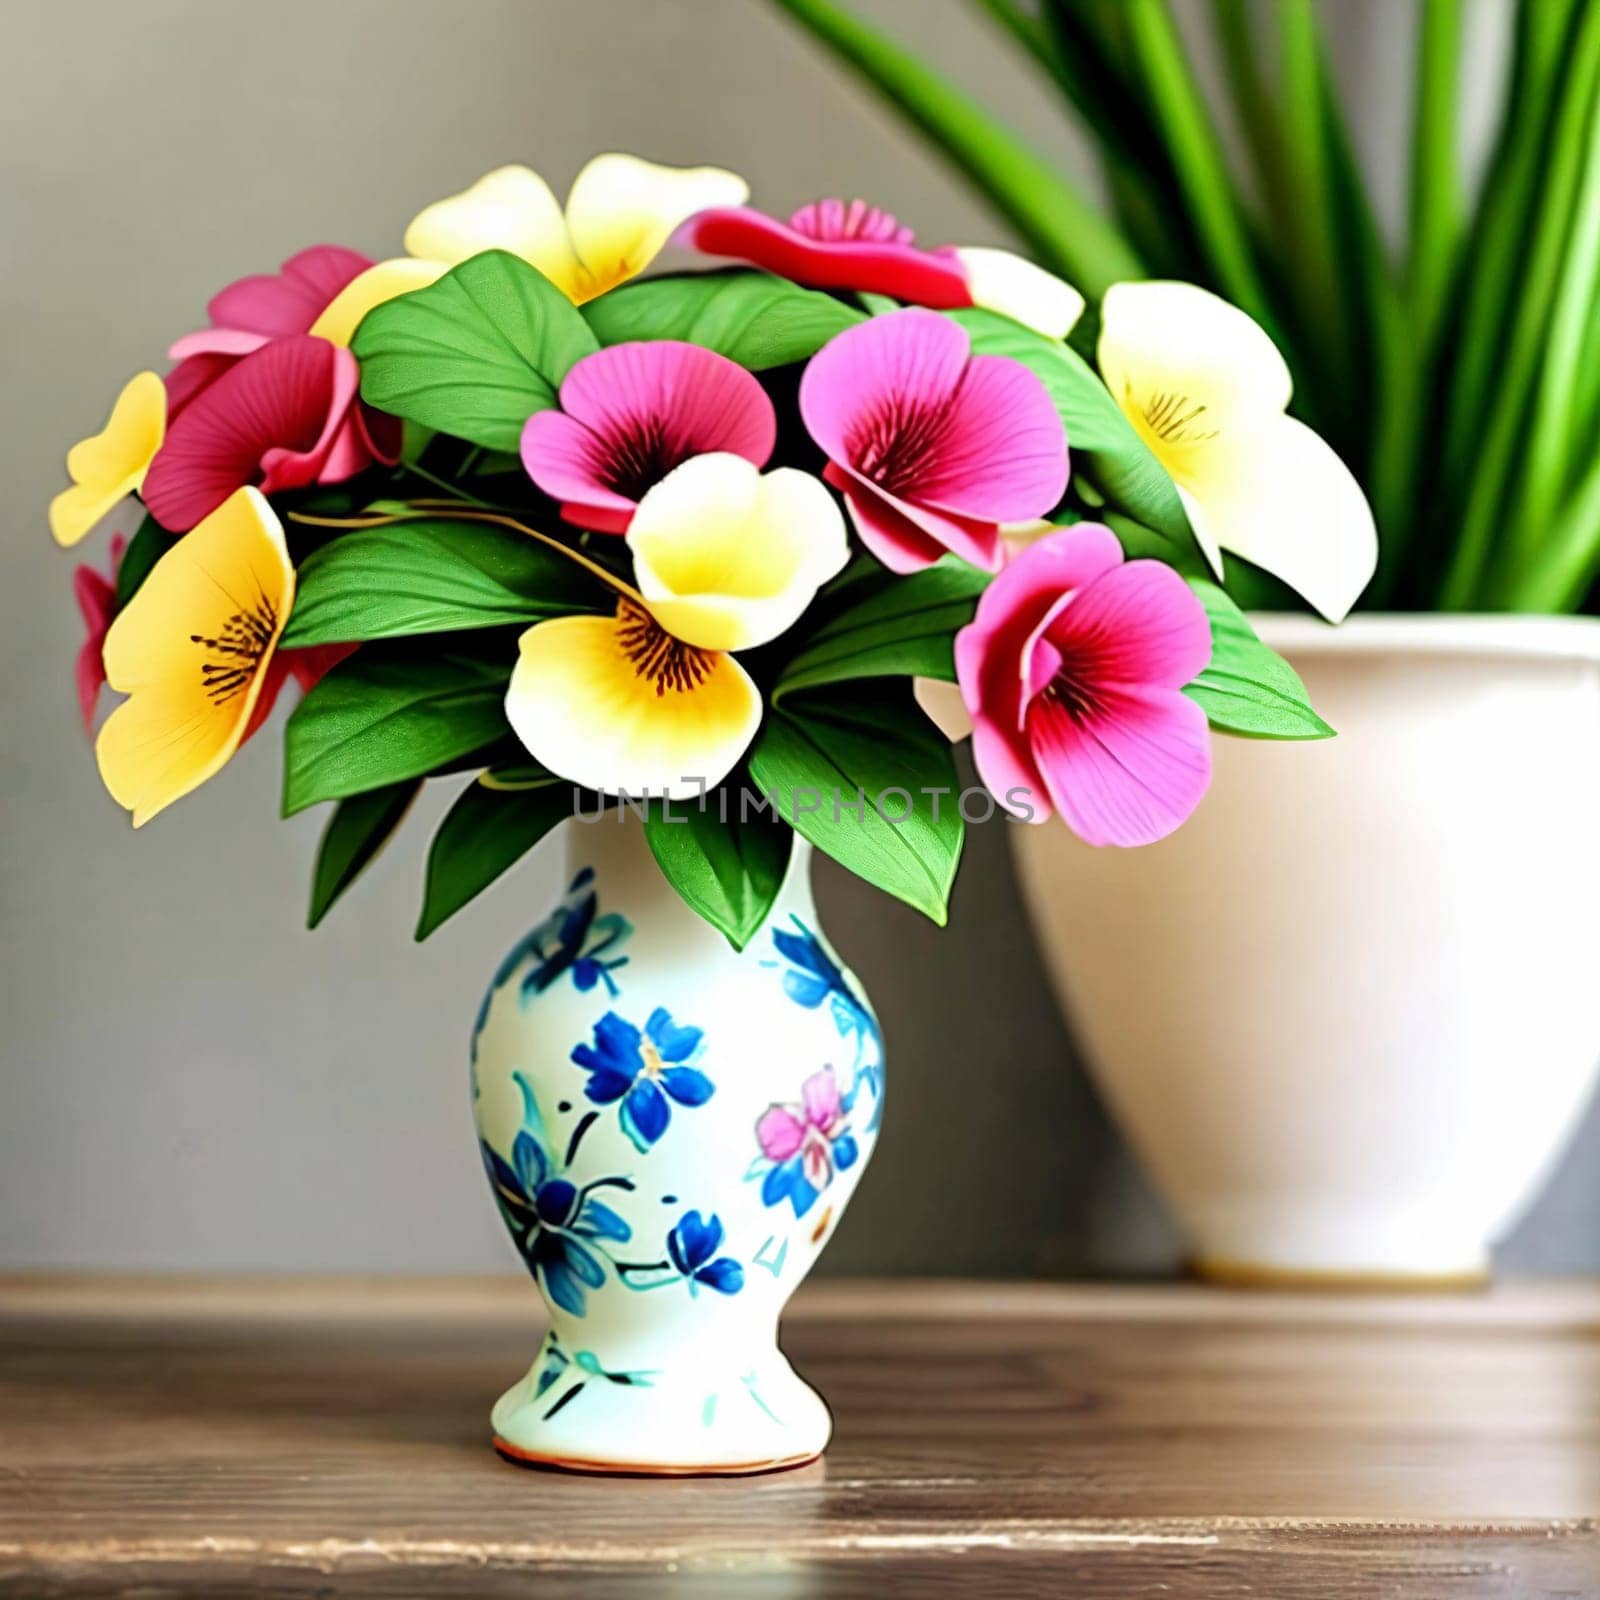 Delicate beauty of a floral arrangement in a vintage ceramic vase. by GoodOlga